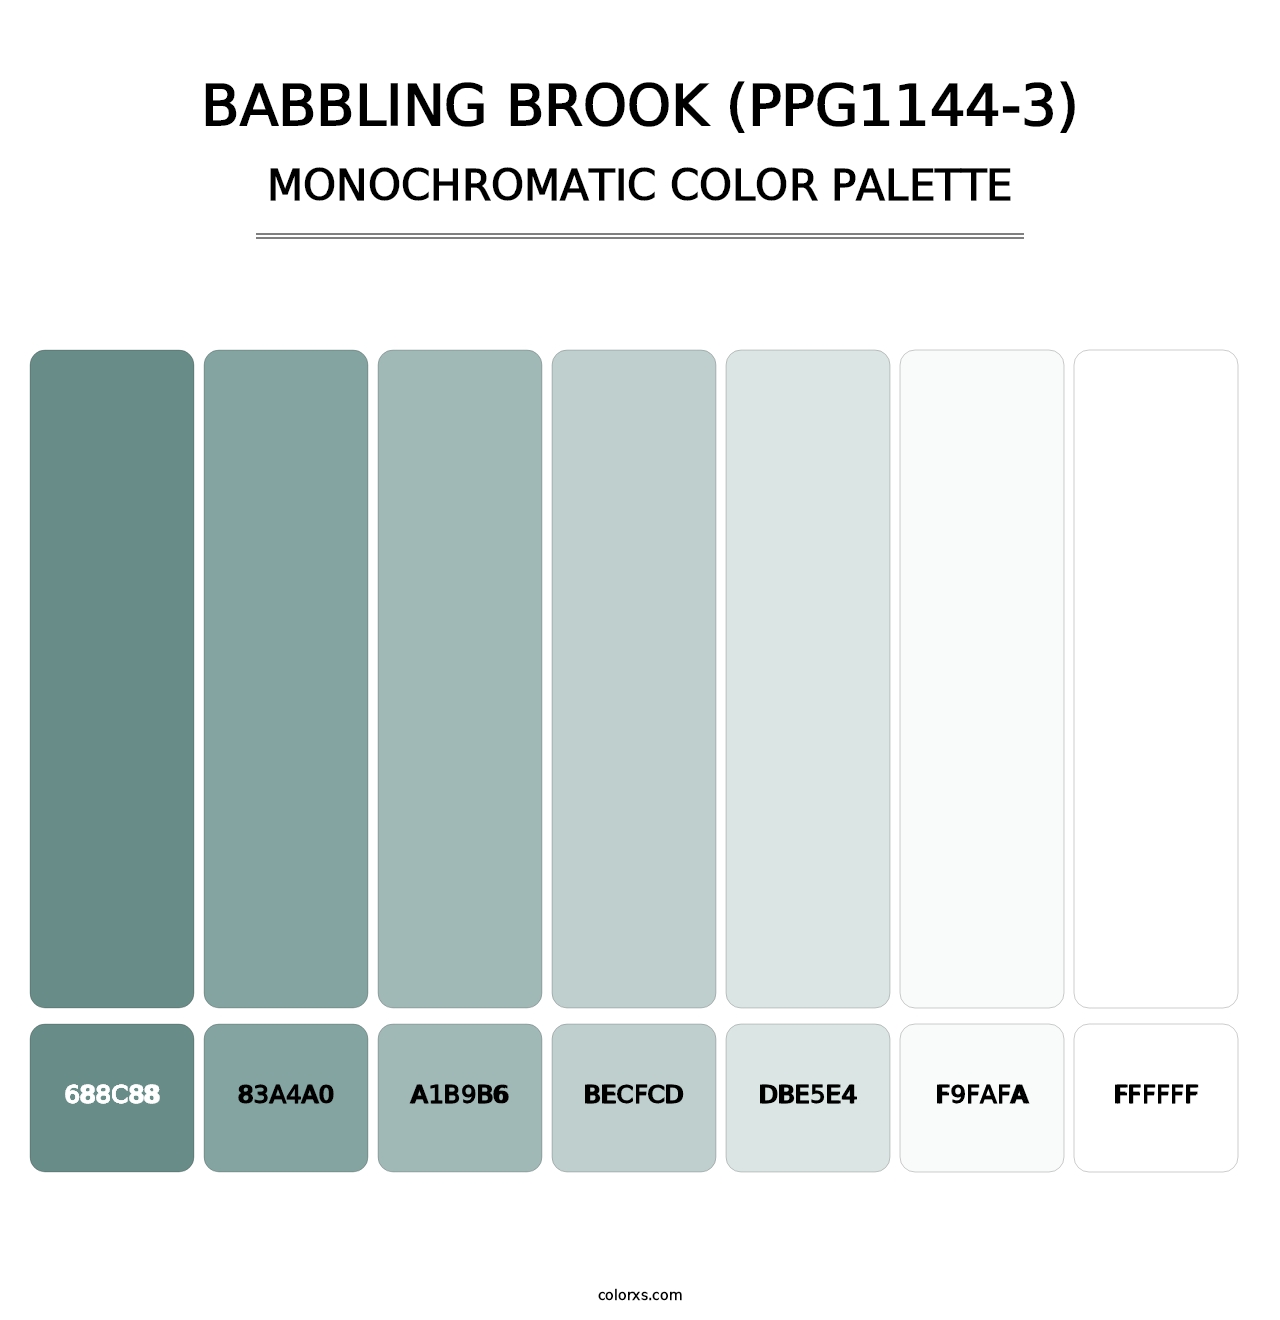 Babbling Brook (PPG1144-3) - Monochromatic Color Palette